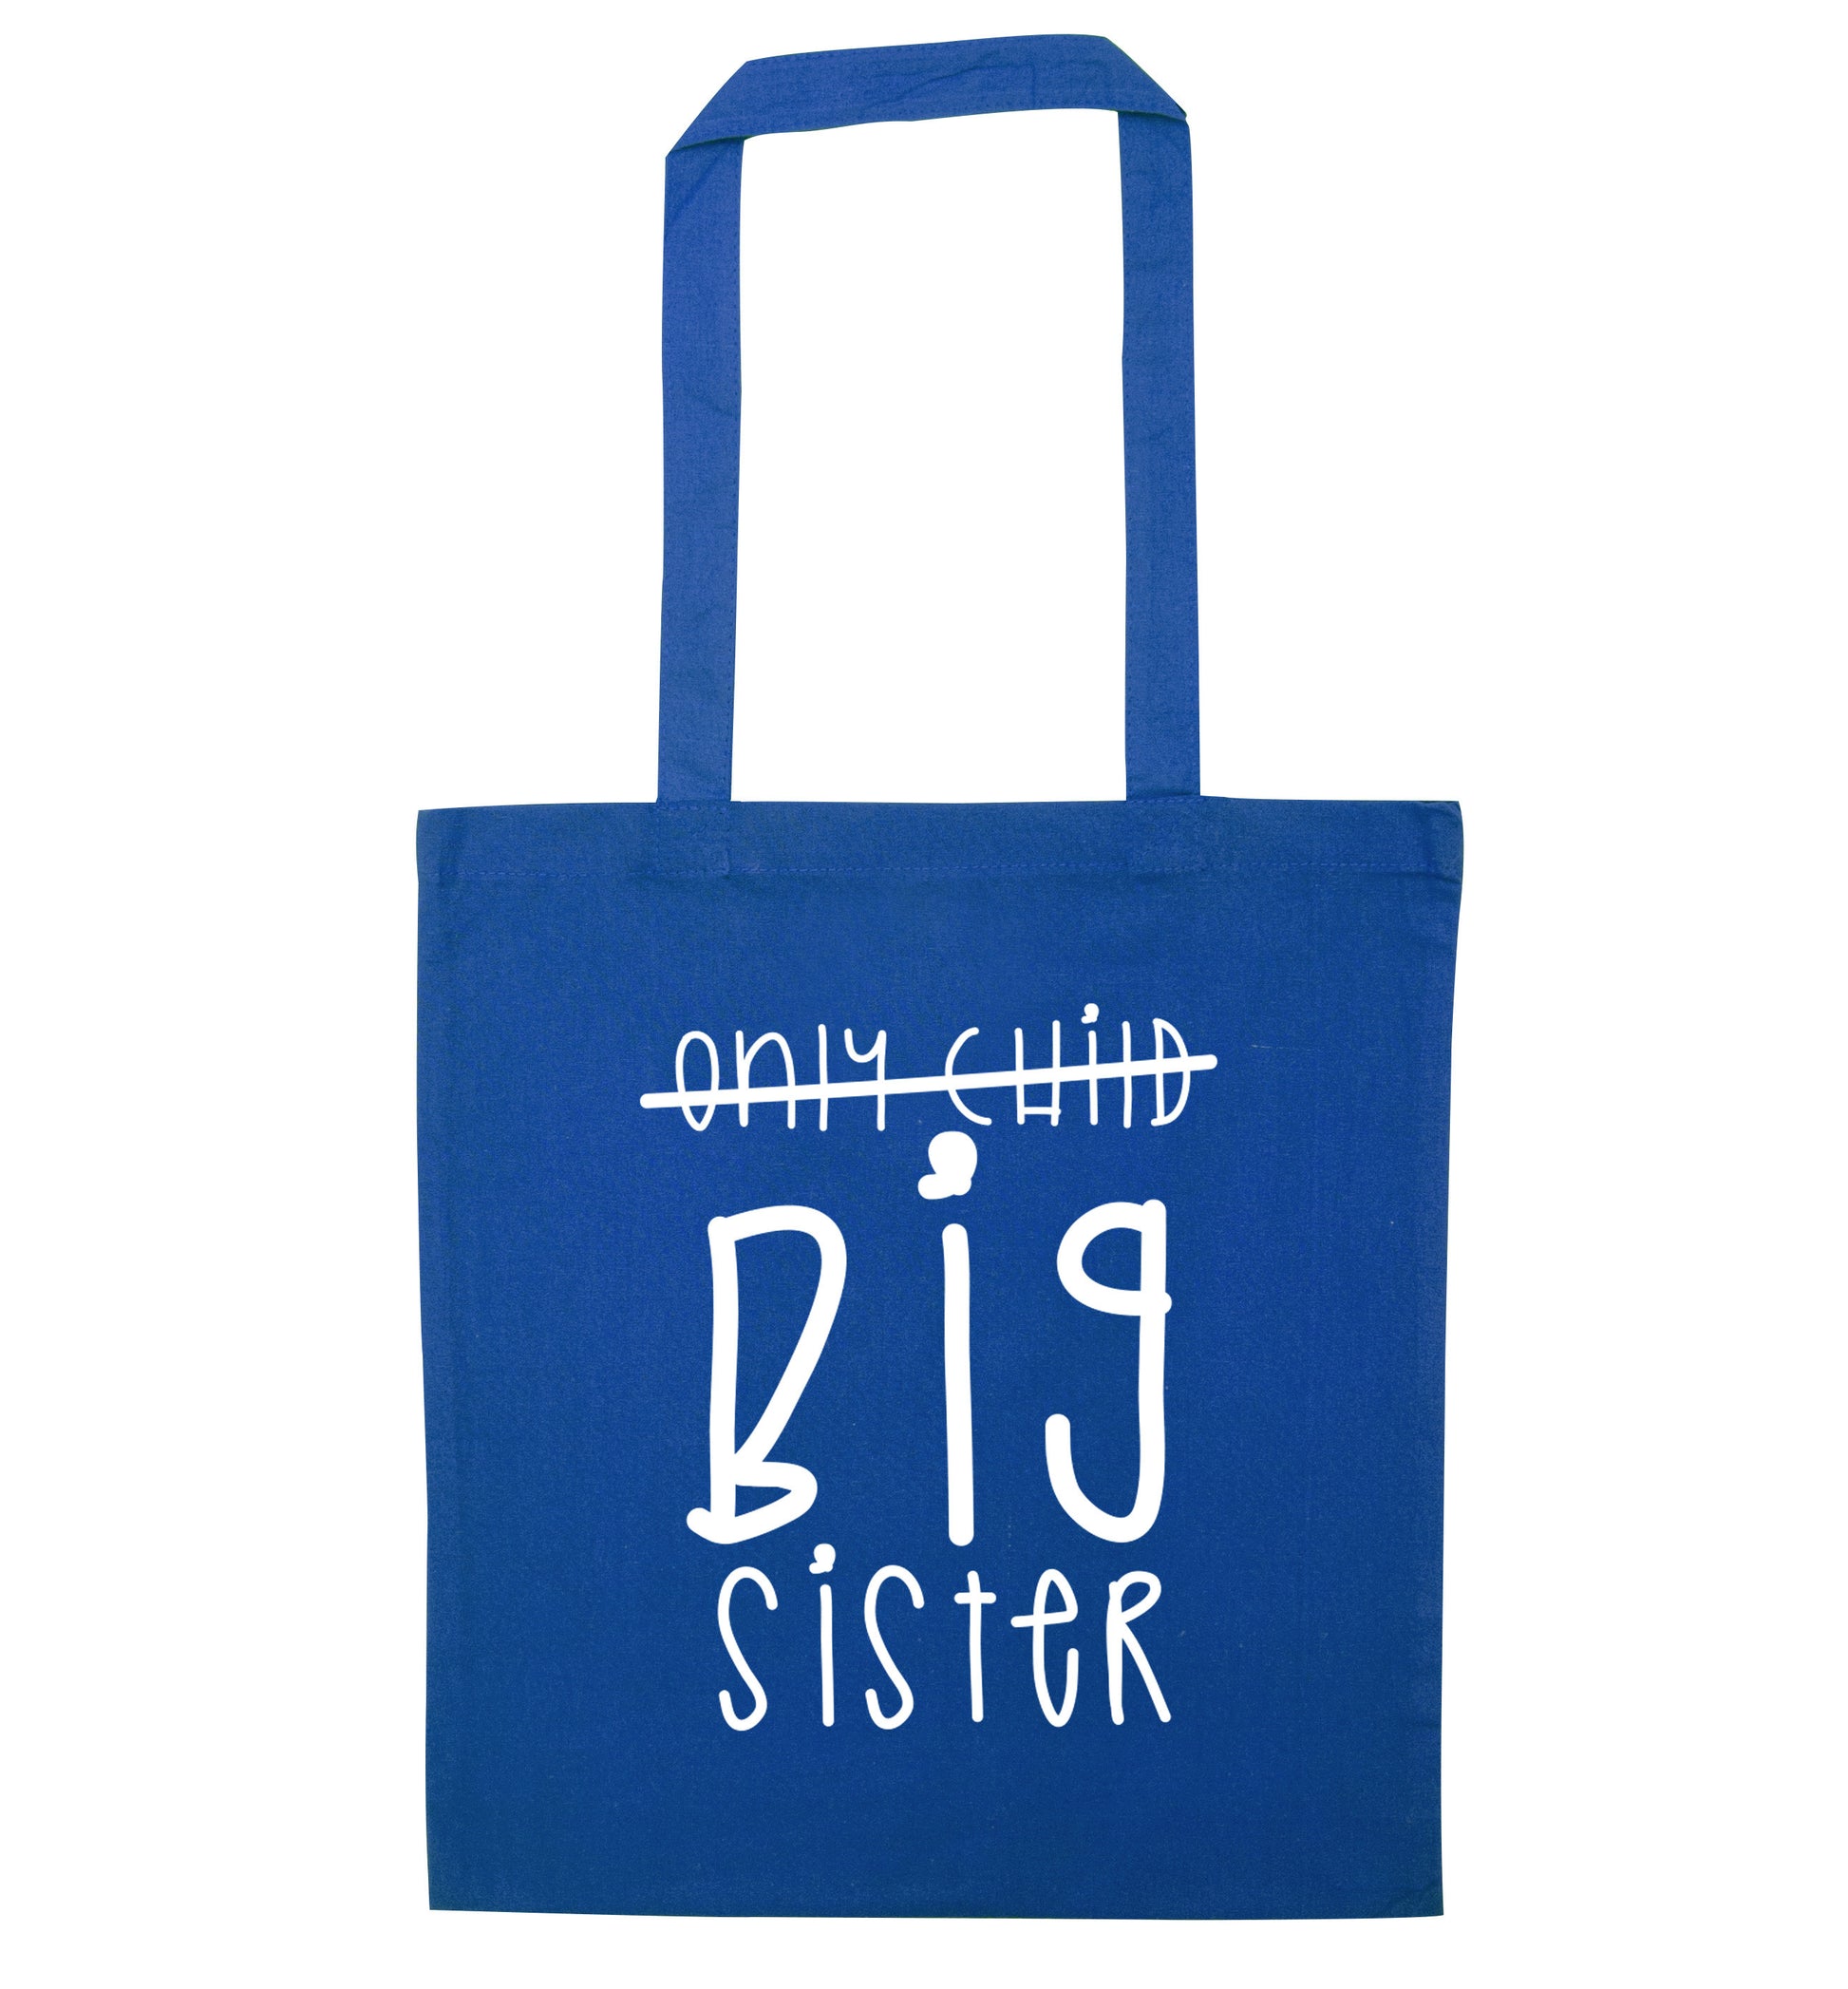 Only child big sister blue tote bag